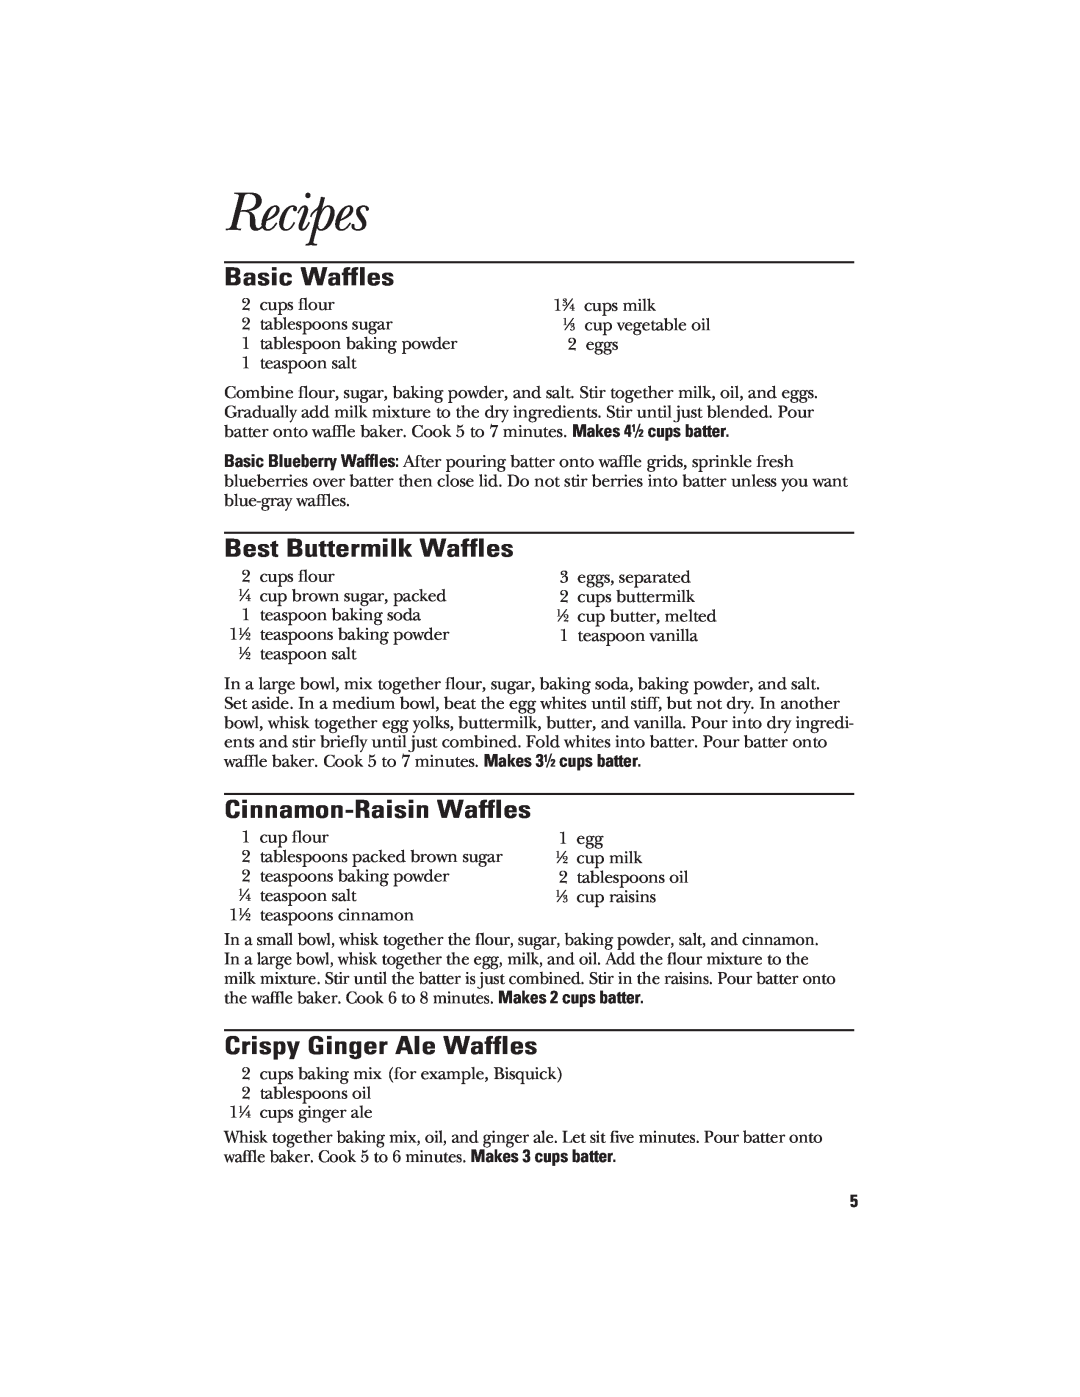 GE 840085600 manual Recipes, Basic Waffles, Best Buttermilk Waffles, Cinnamon-RaisinWaffles, Crispy Ginger Ale Waffles 